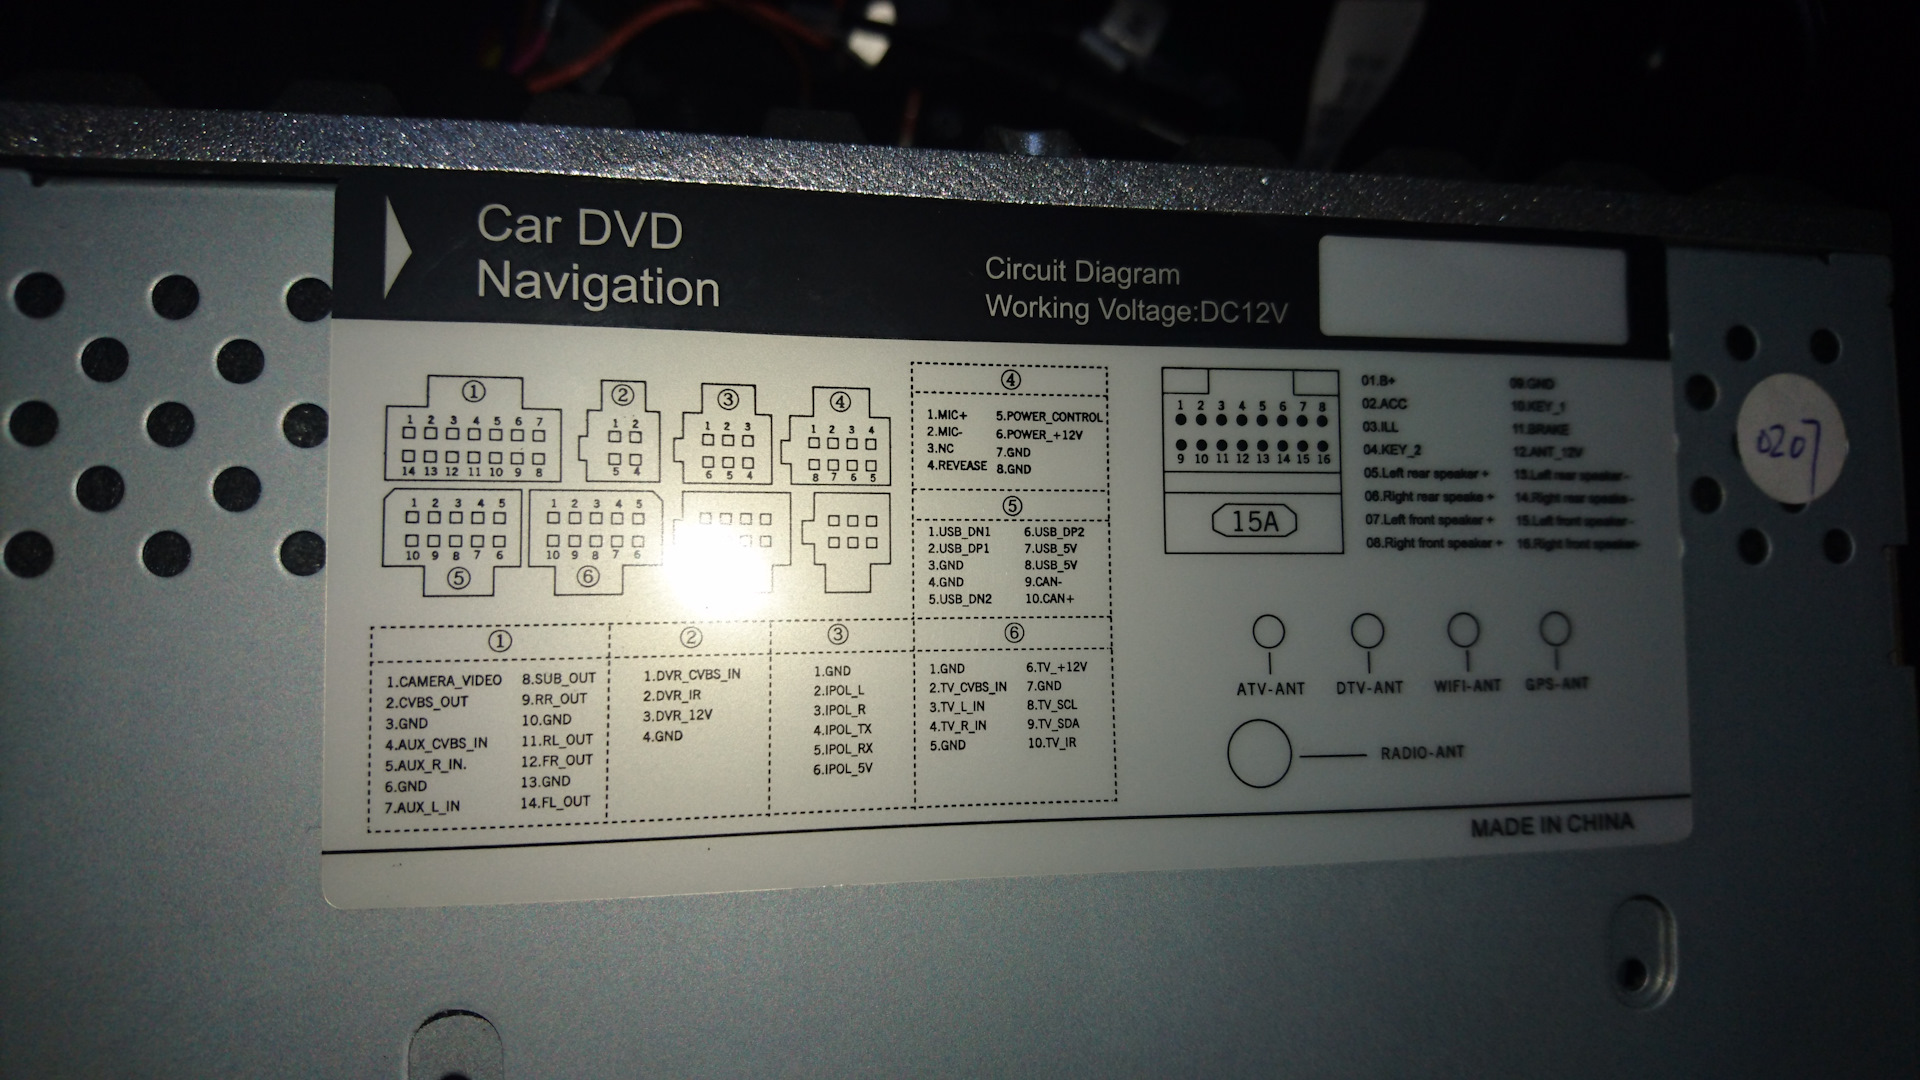 Магнитола 12v. Разъёмы магнитолы Navi 800 DVD. Car DVD navigation магнитола DC 12v. Mitsubishi car navigation магнитола. Movement car DVD проигрыватель.